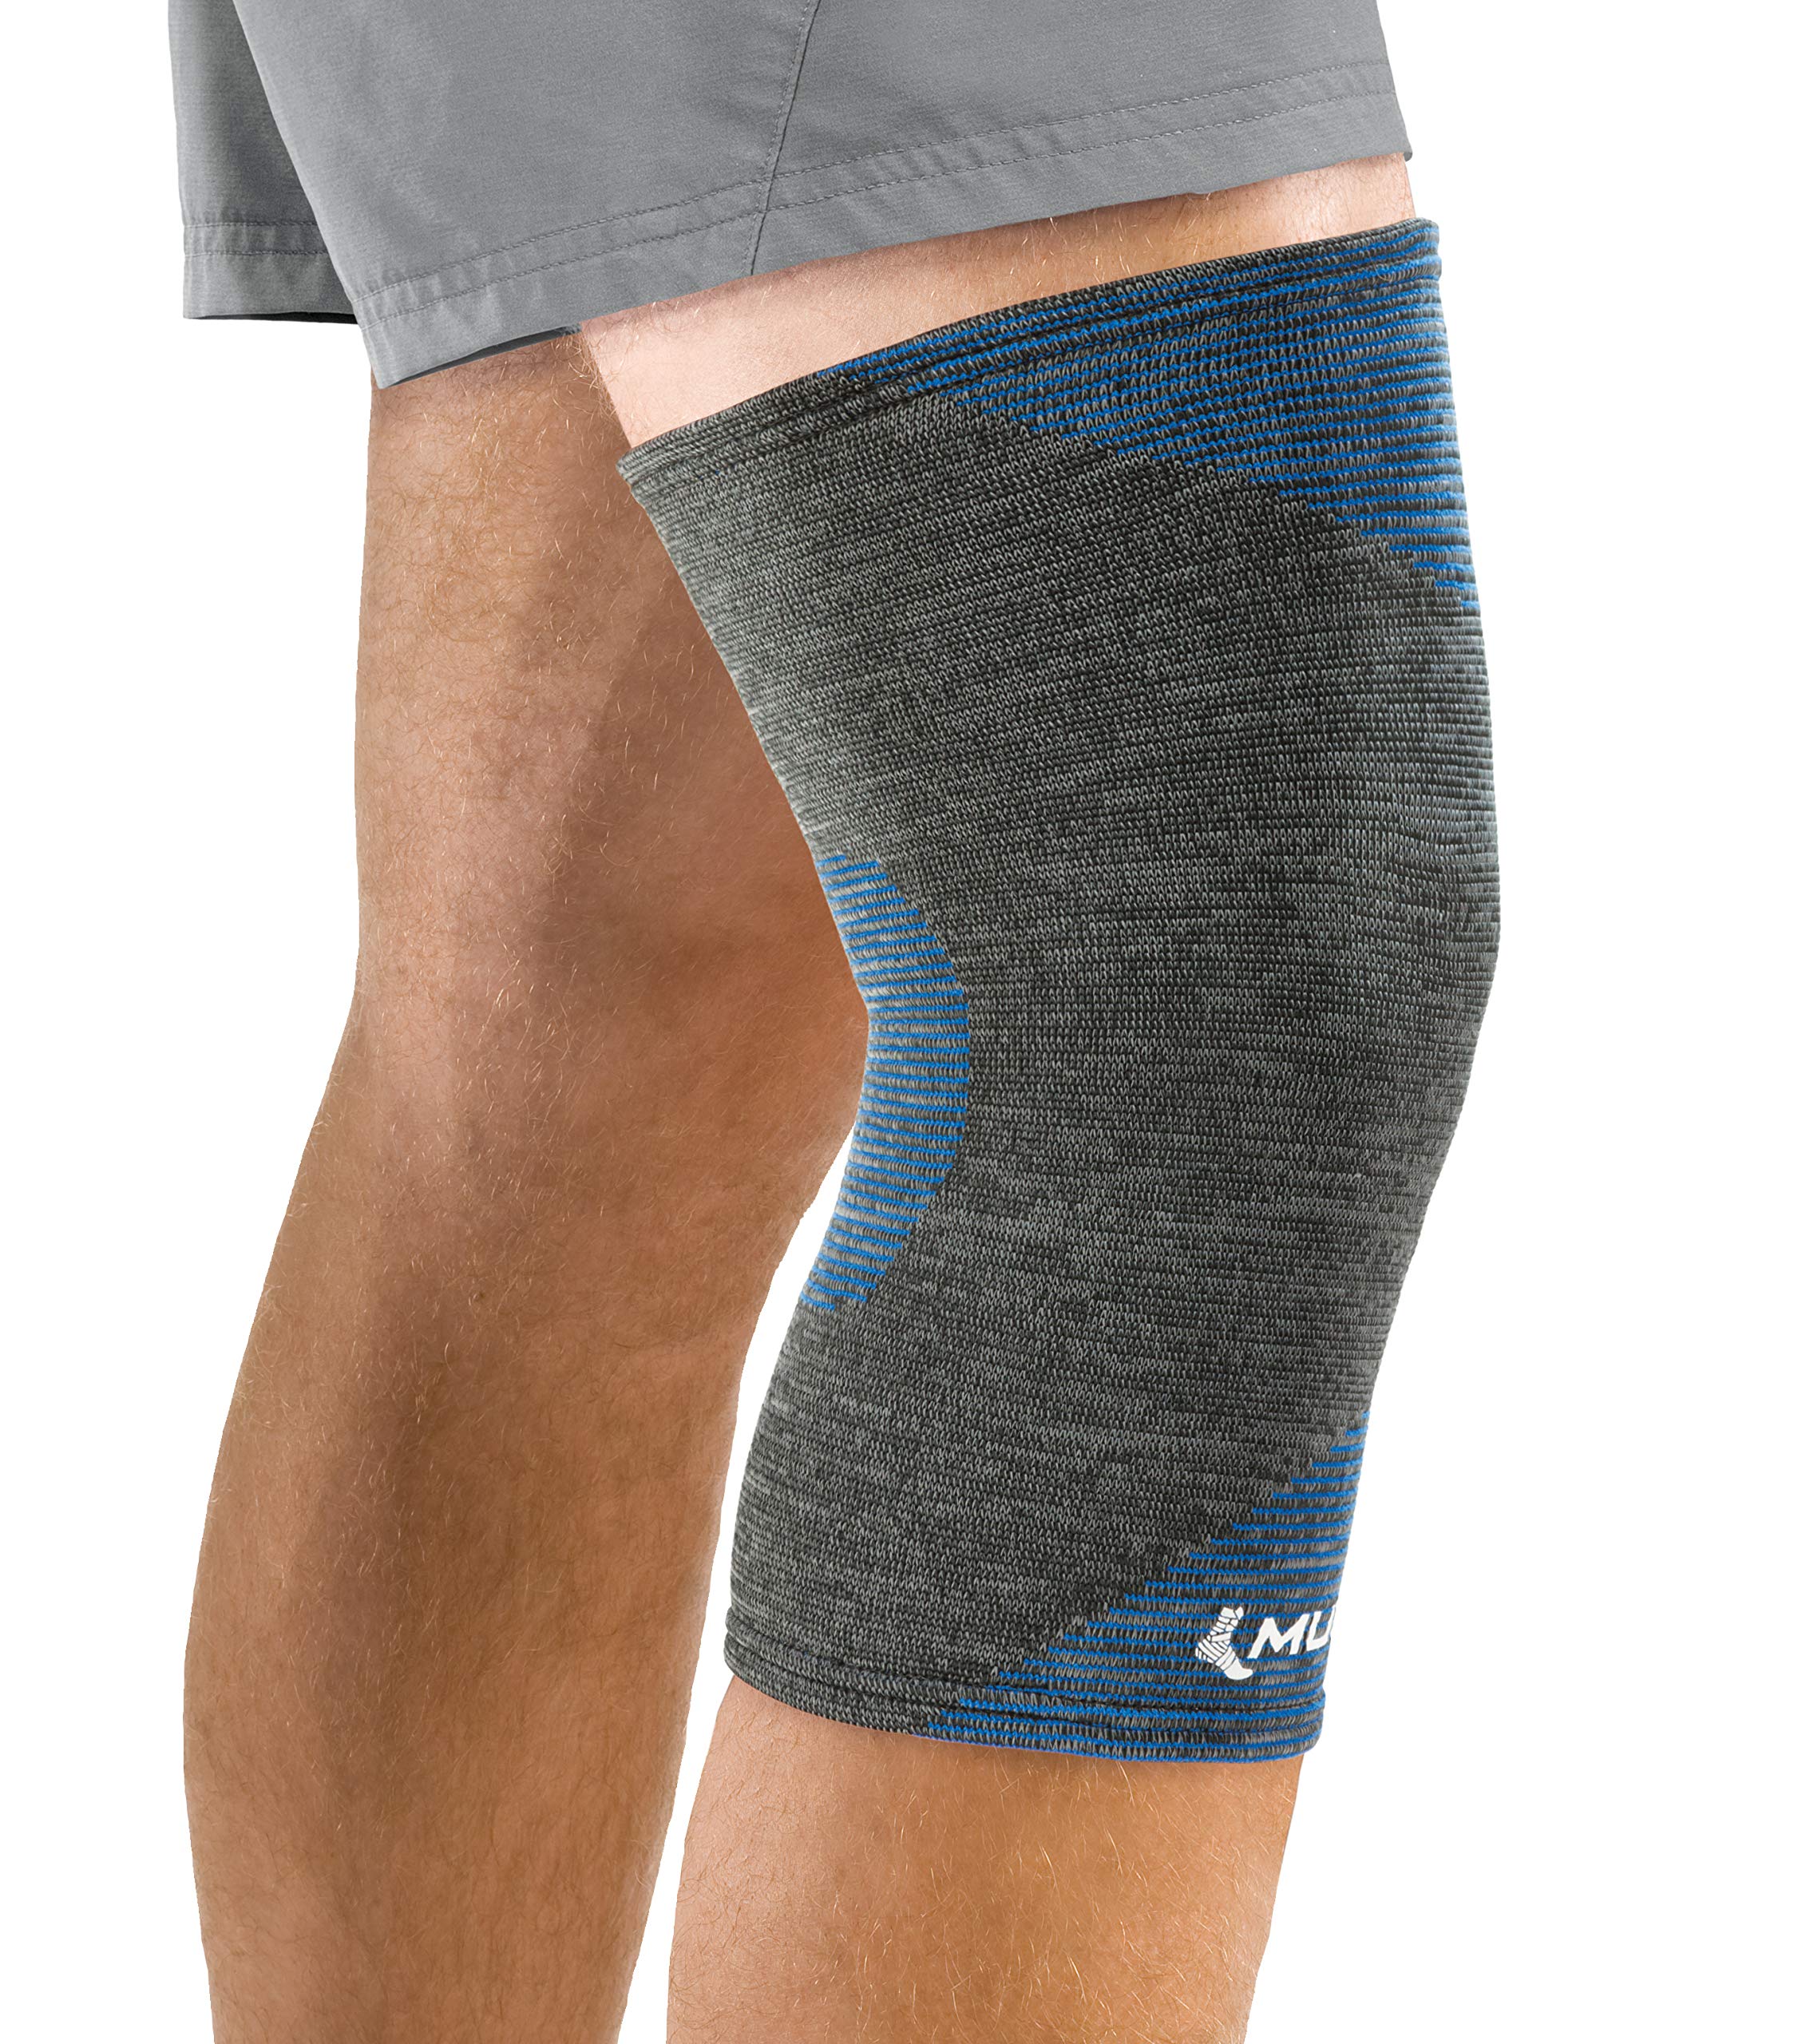 Mueller Sports Medicine FIR 4-Way Knee Support Sleeve, For Men and Women,  Gray/Blue, S/M Small/Medium (Pack of 1)